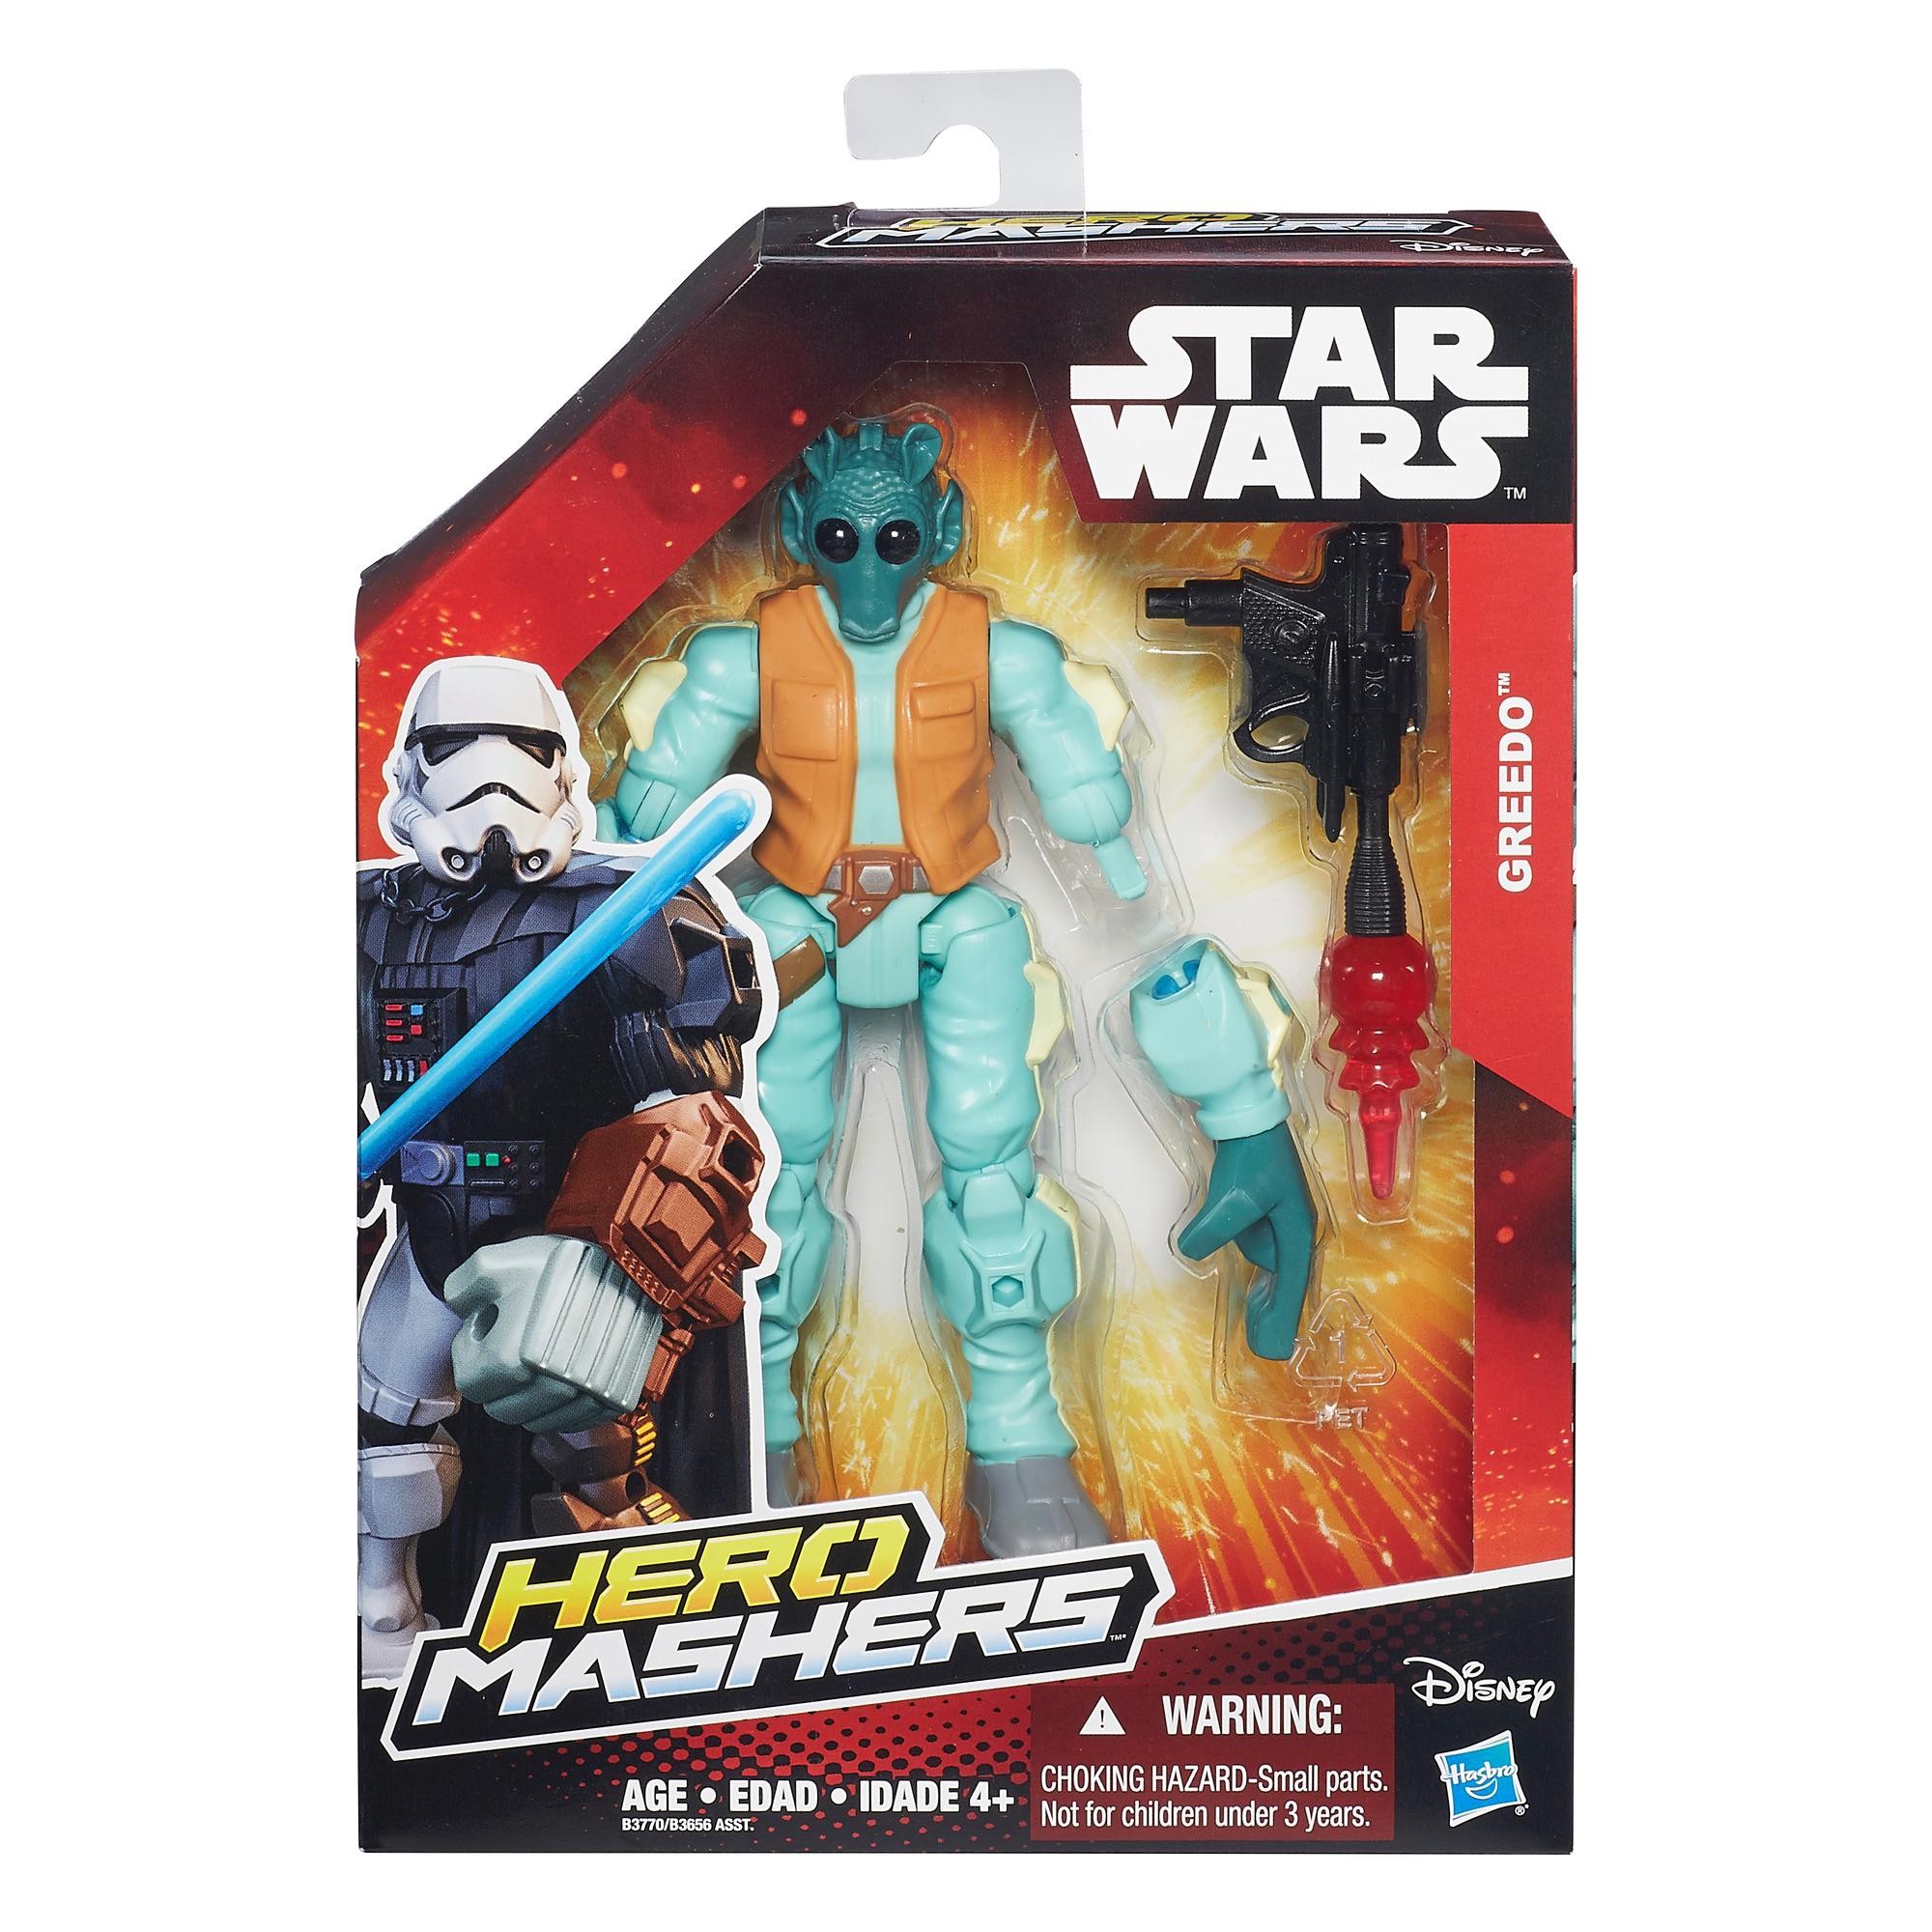 Disney Star Wars 'Greedo' Hero Mashers 6 inch Figure Toy